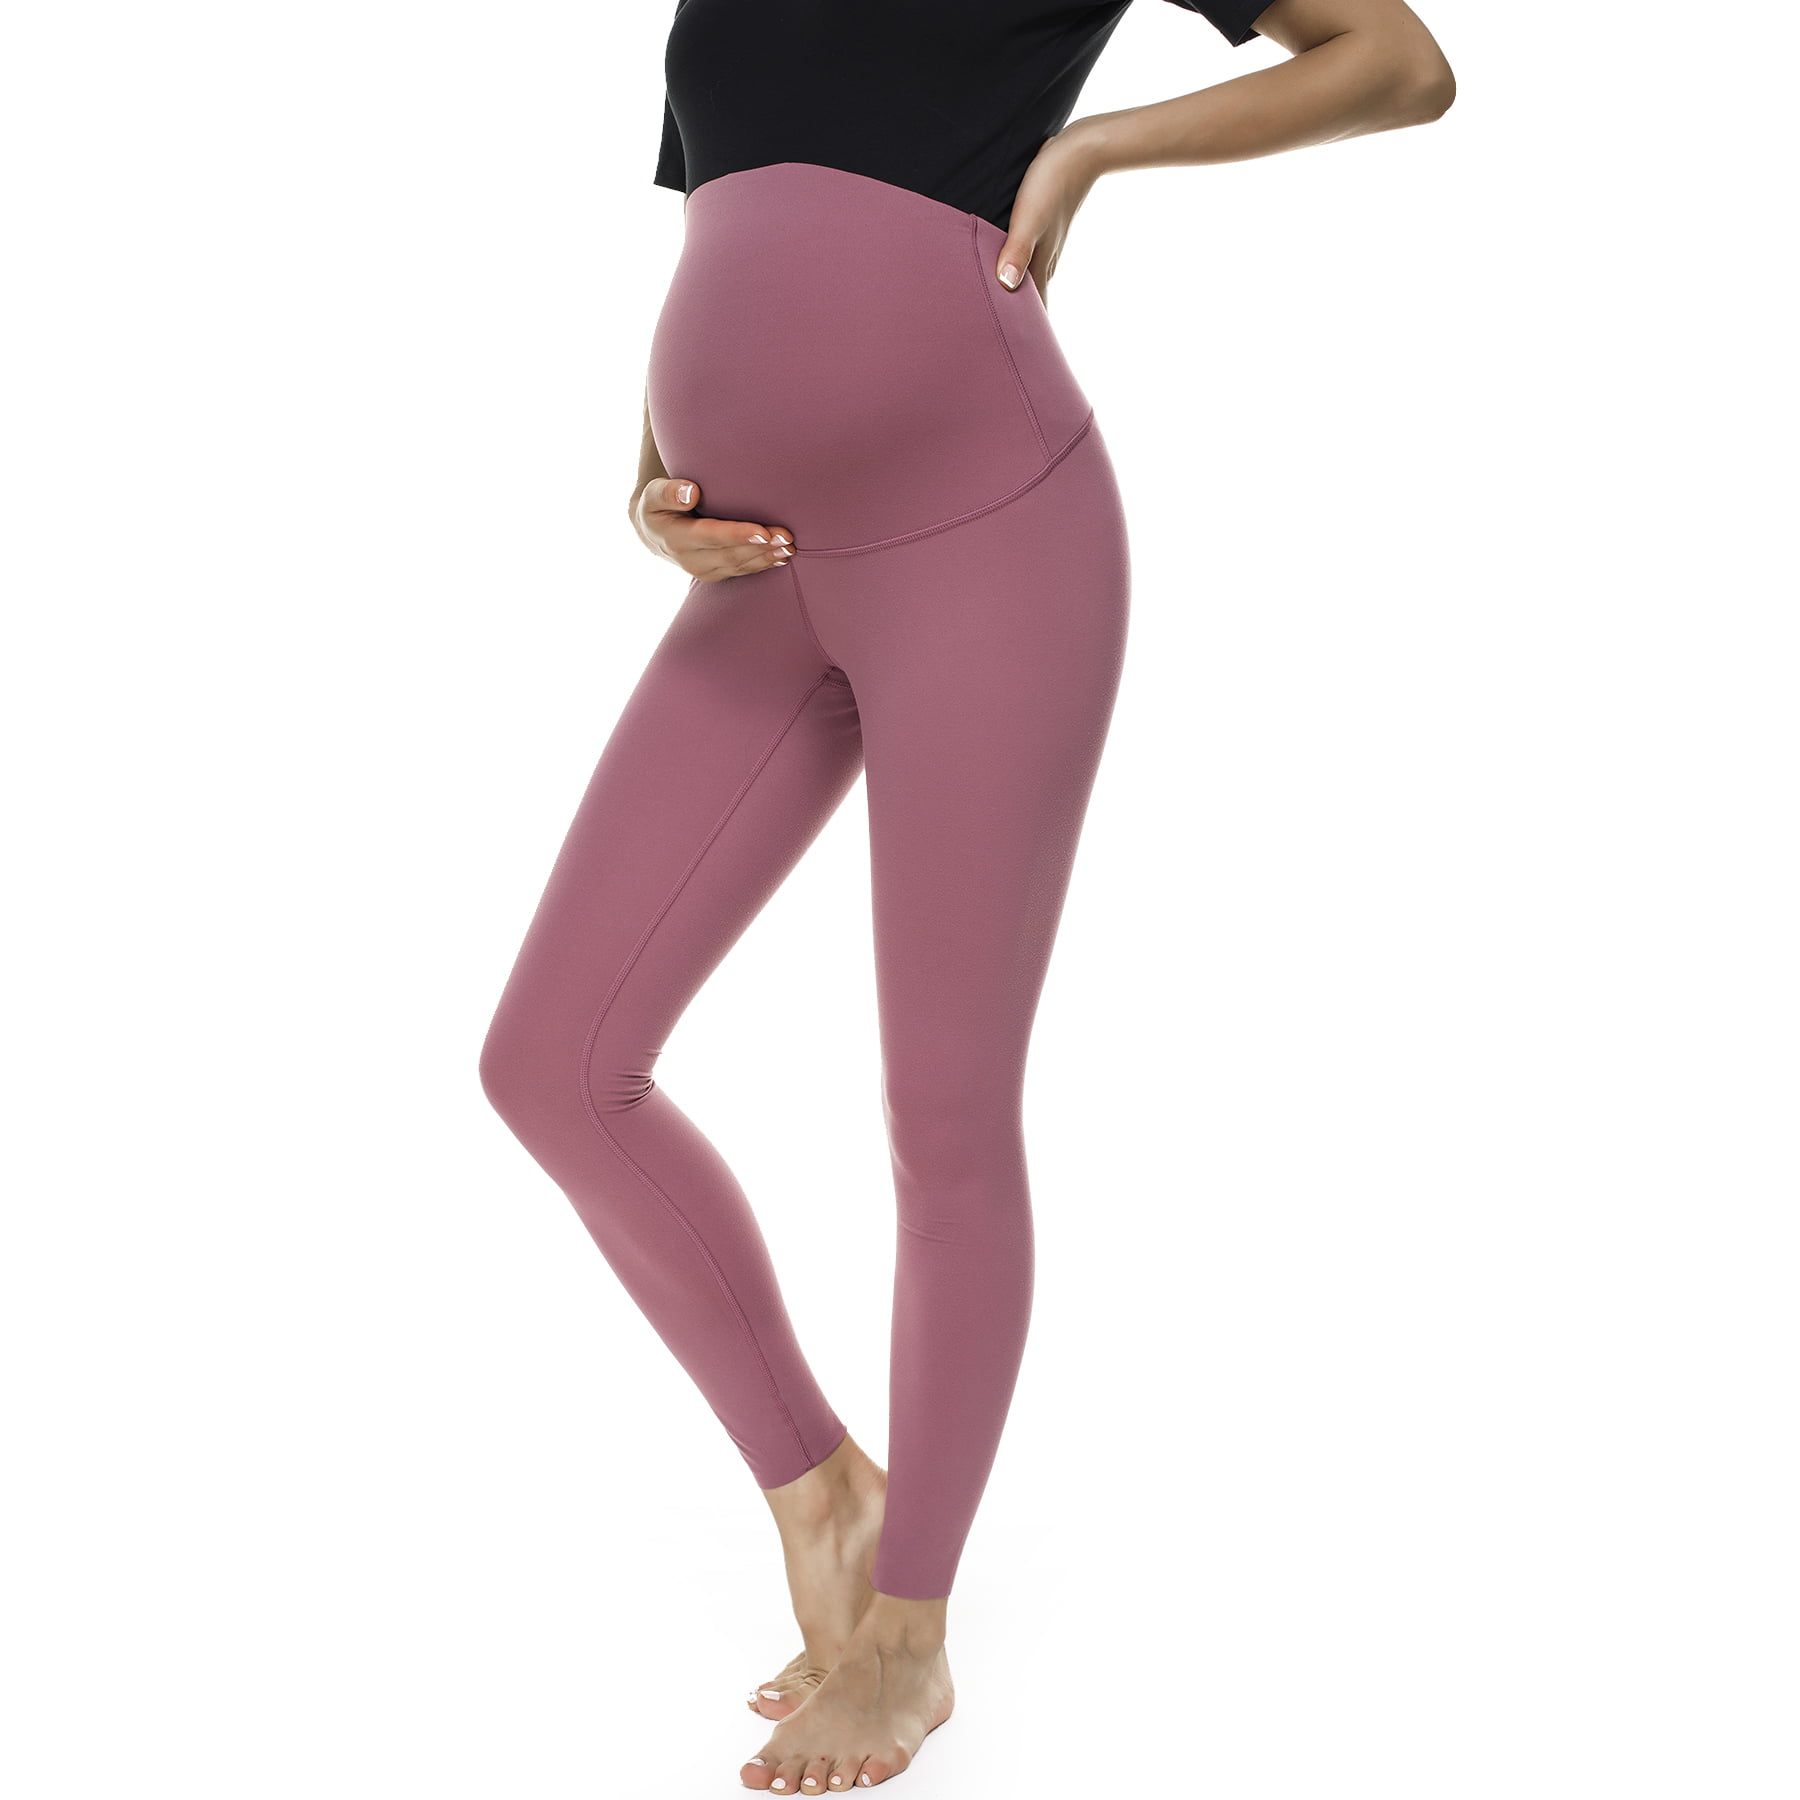 HOFISH Women's Ultra Soft Thermal Bottom Underwear Stretchy Yoga Pants Maternity Long Leggings Pants 